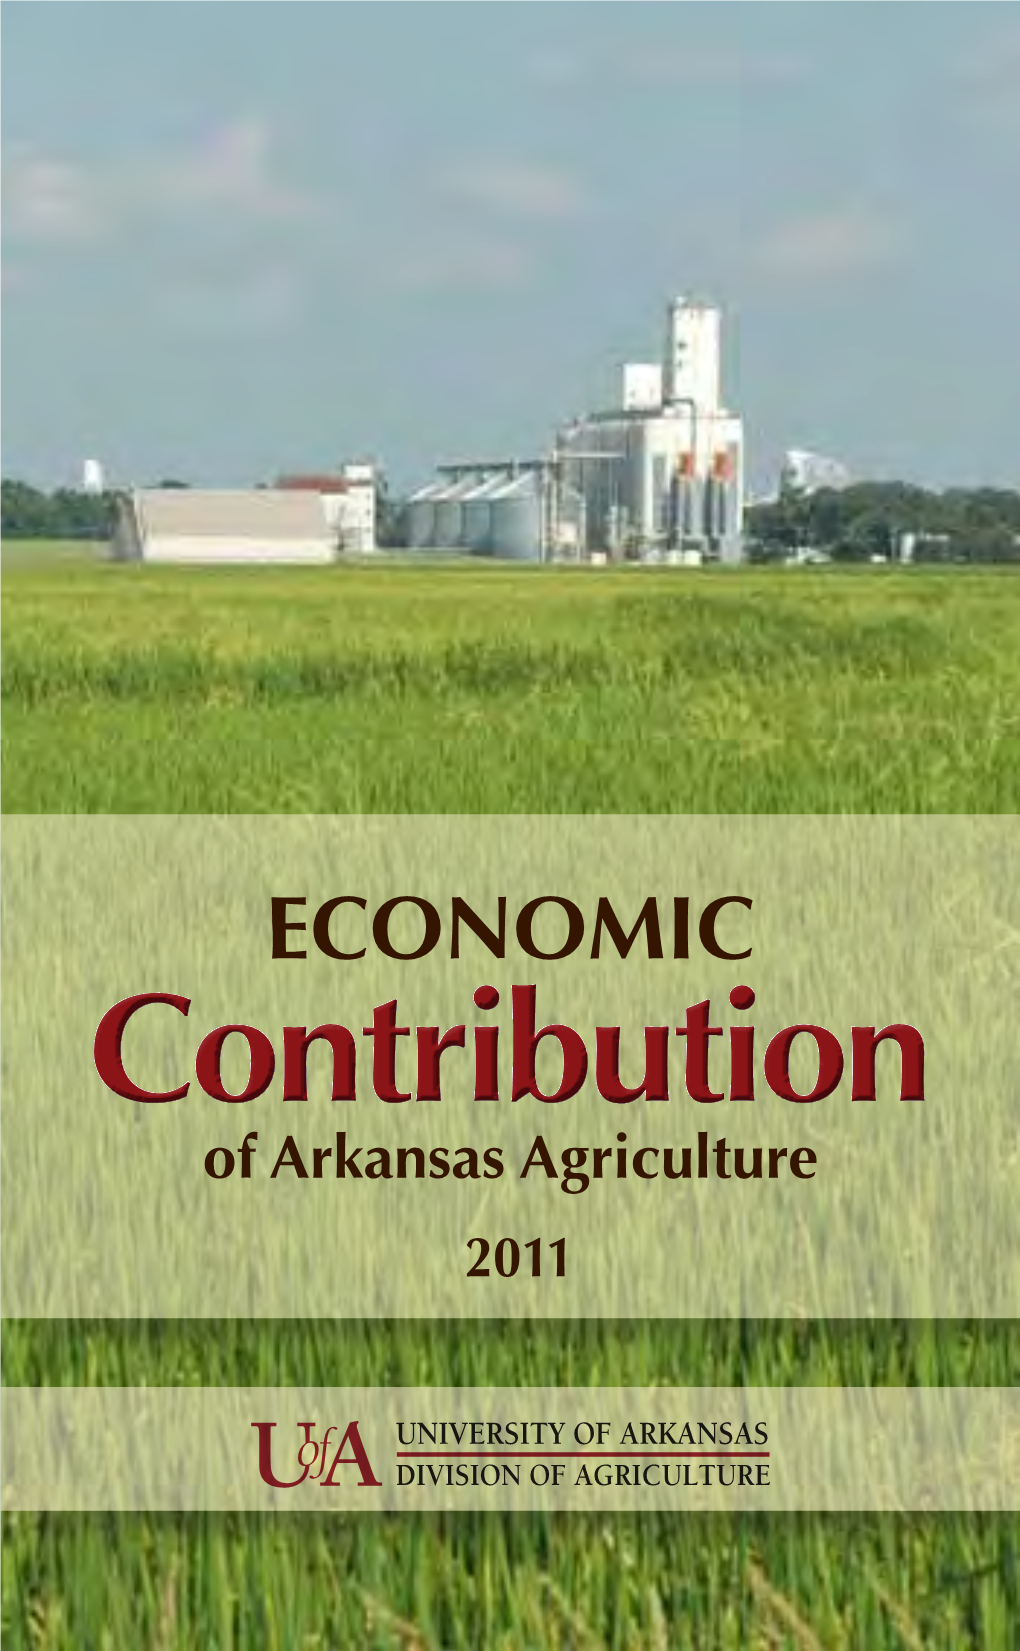 ECONOMIC Contribution of Arkansas Agriculture 2011 Contents Total Contribution